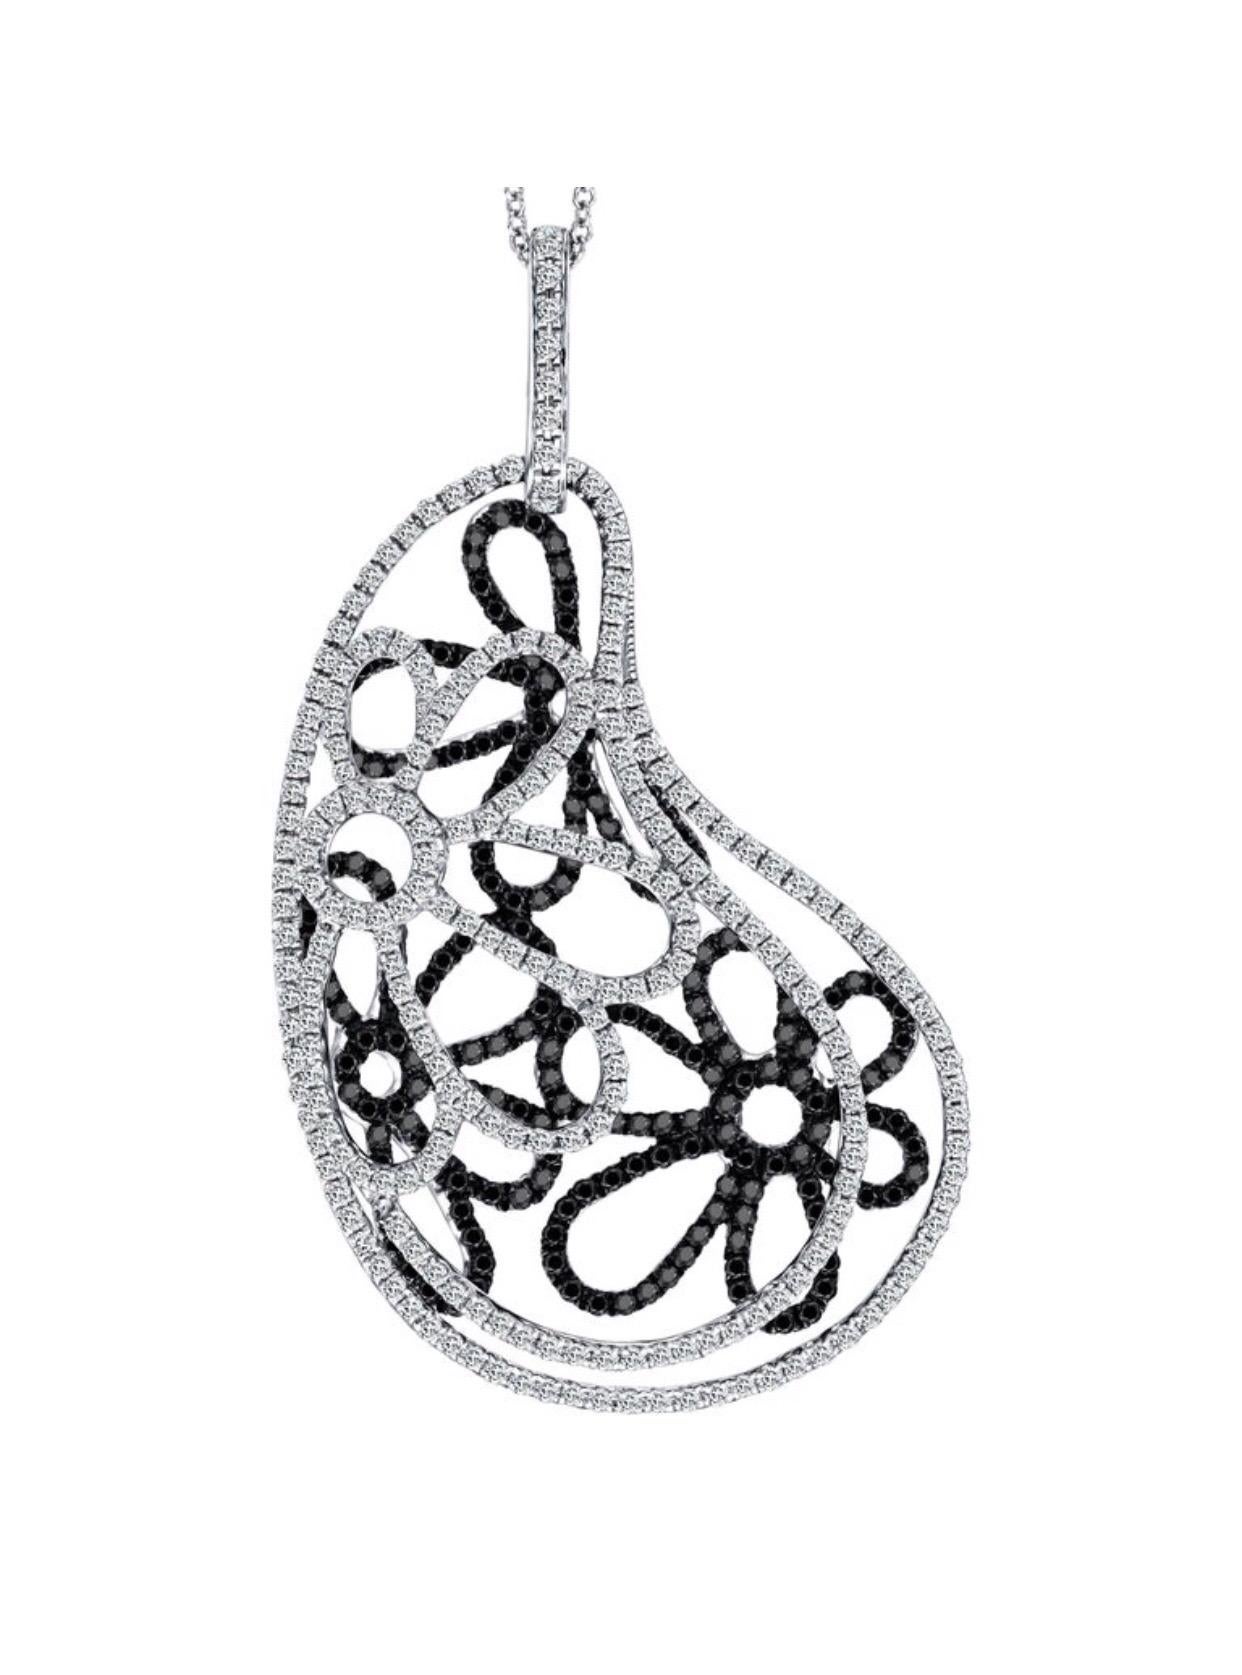 Round Cut 2.44 Carat Black & White Diamond Flower 18 Kt White Gold Pendant Chain Necklace For Sale